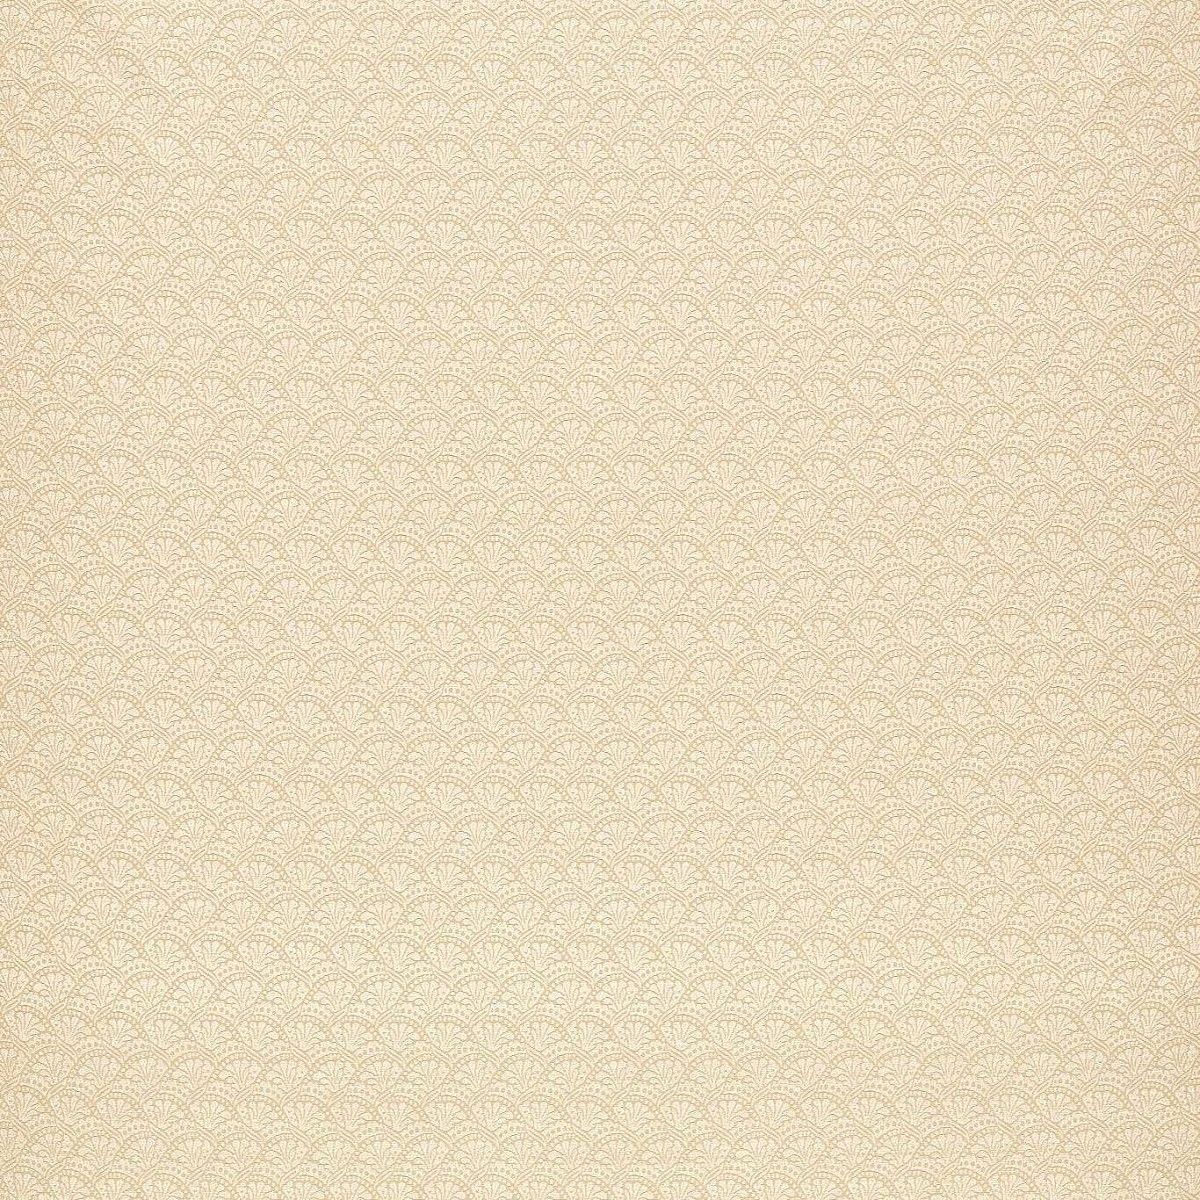 Tudor Damask Paris Grey Fabric by Zoffany